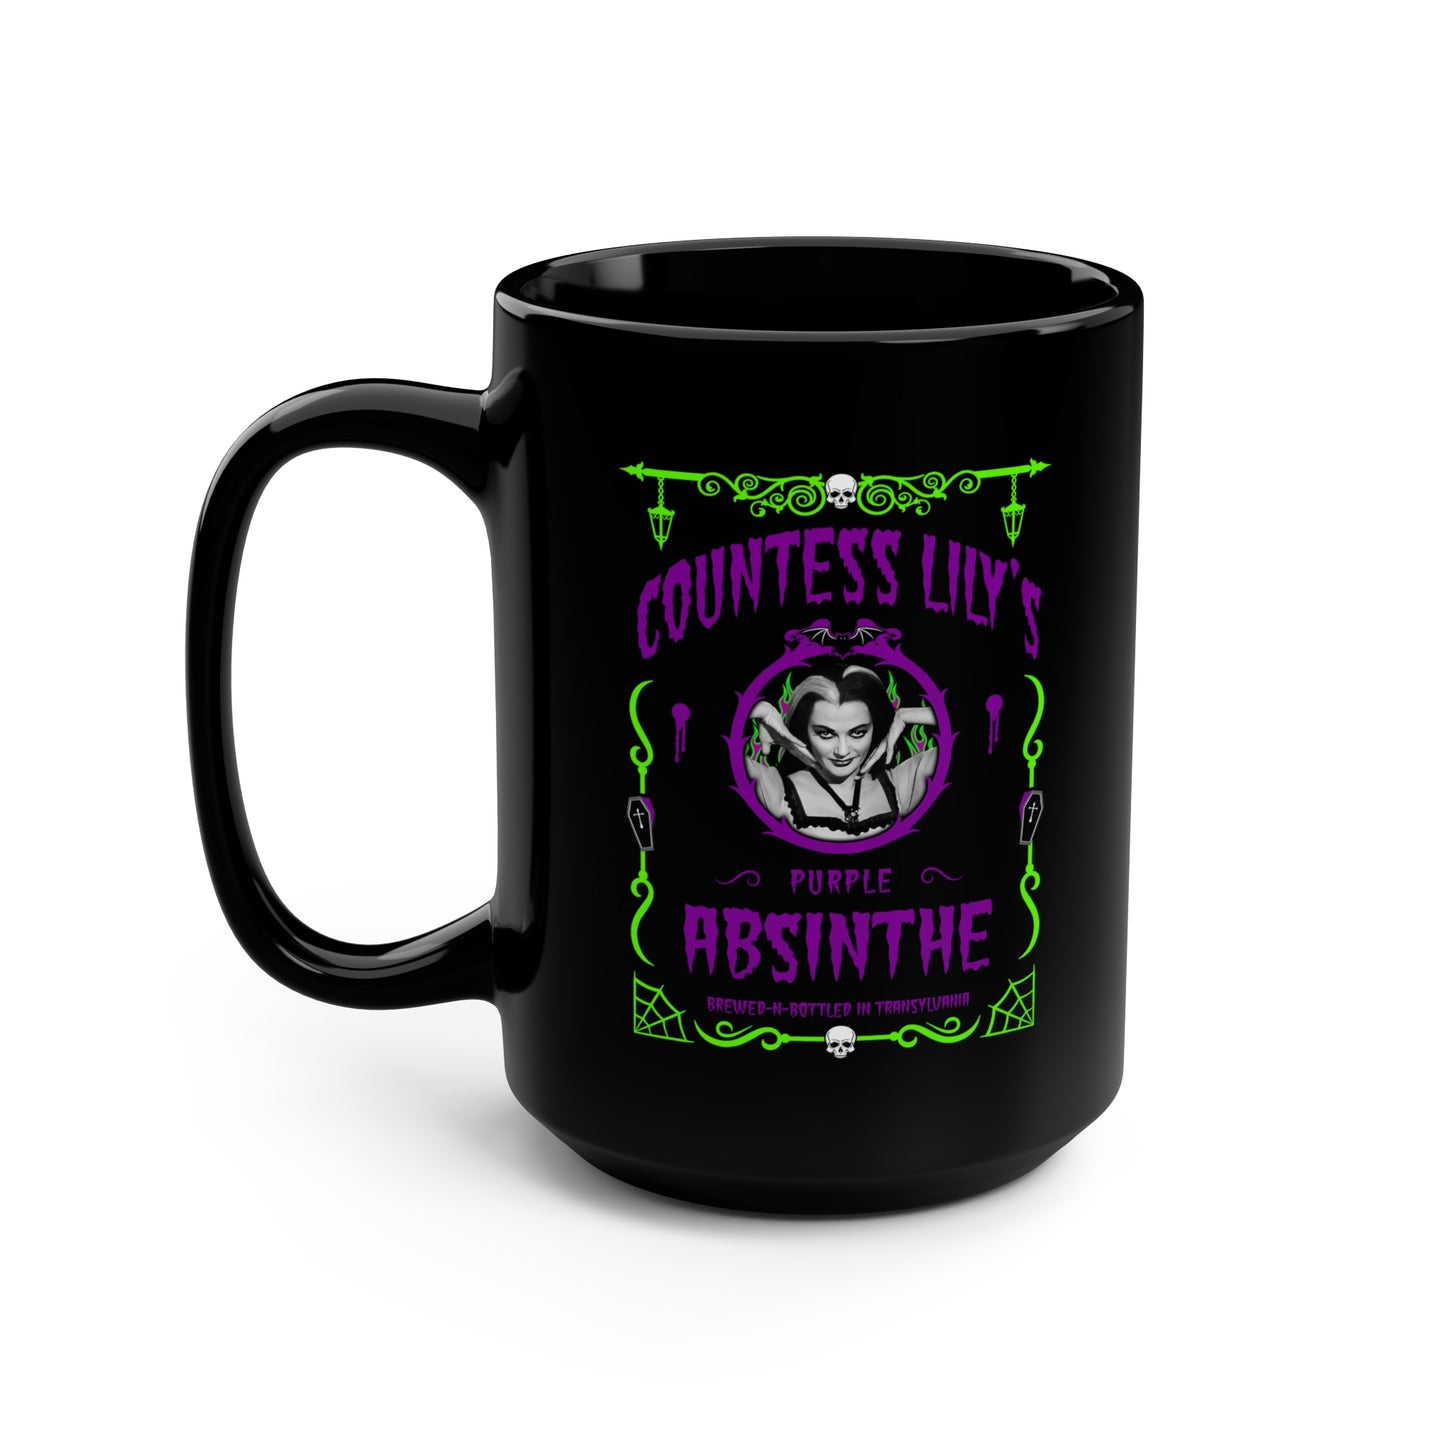 ABSINTHE MONSTERS 3 (COUNTESS LILY) Black Mug, 15oz